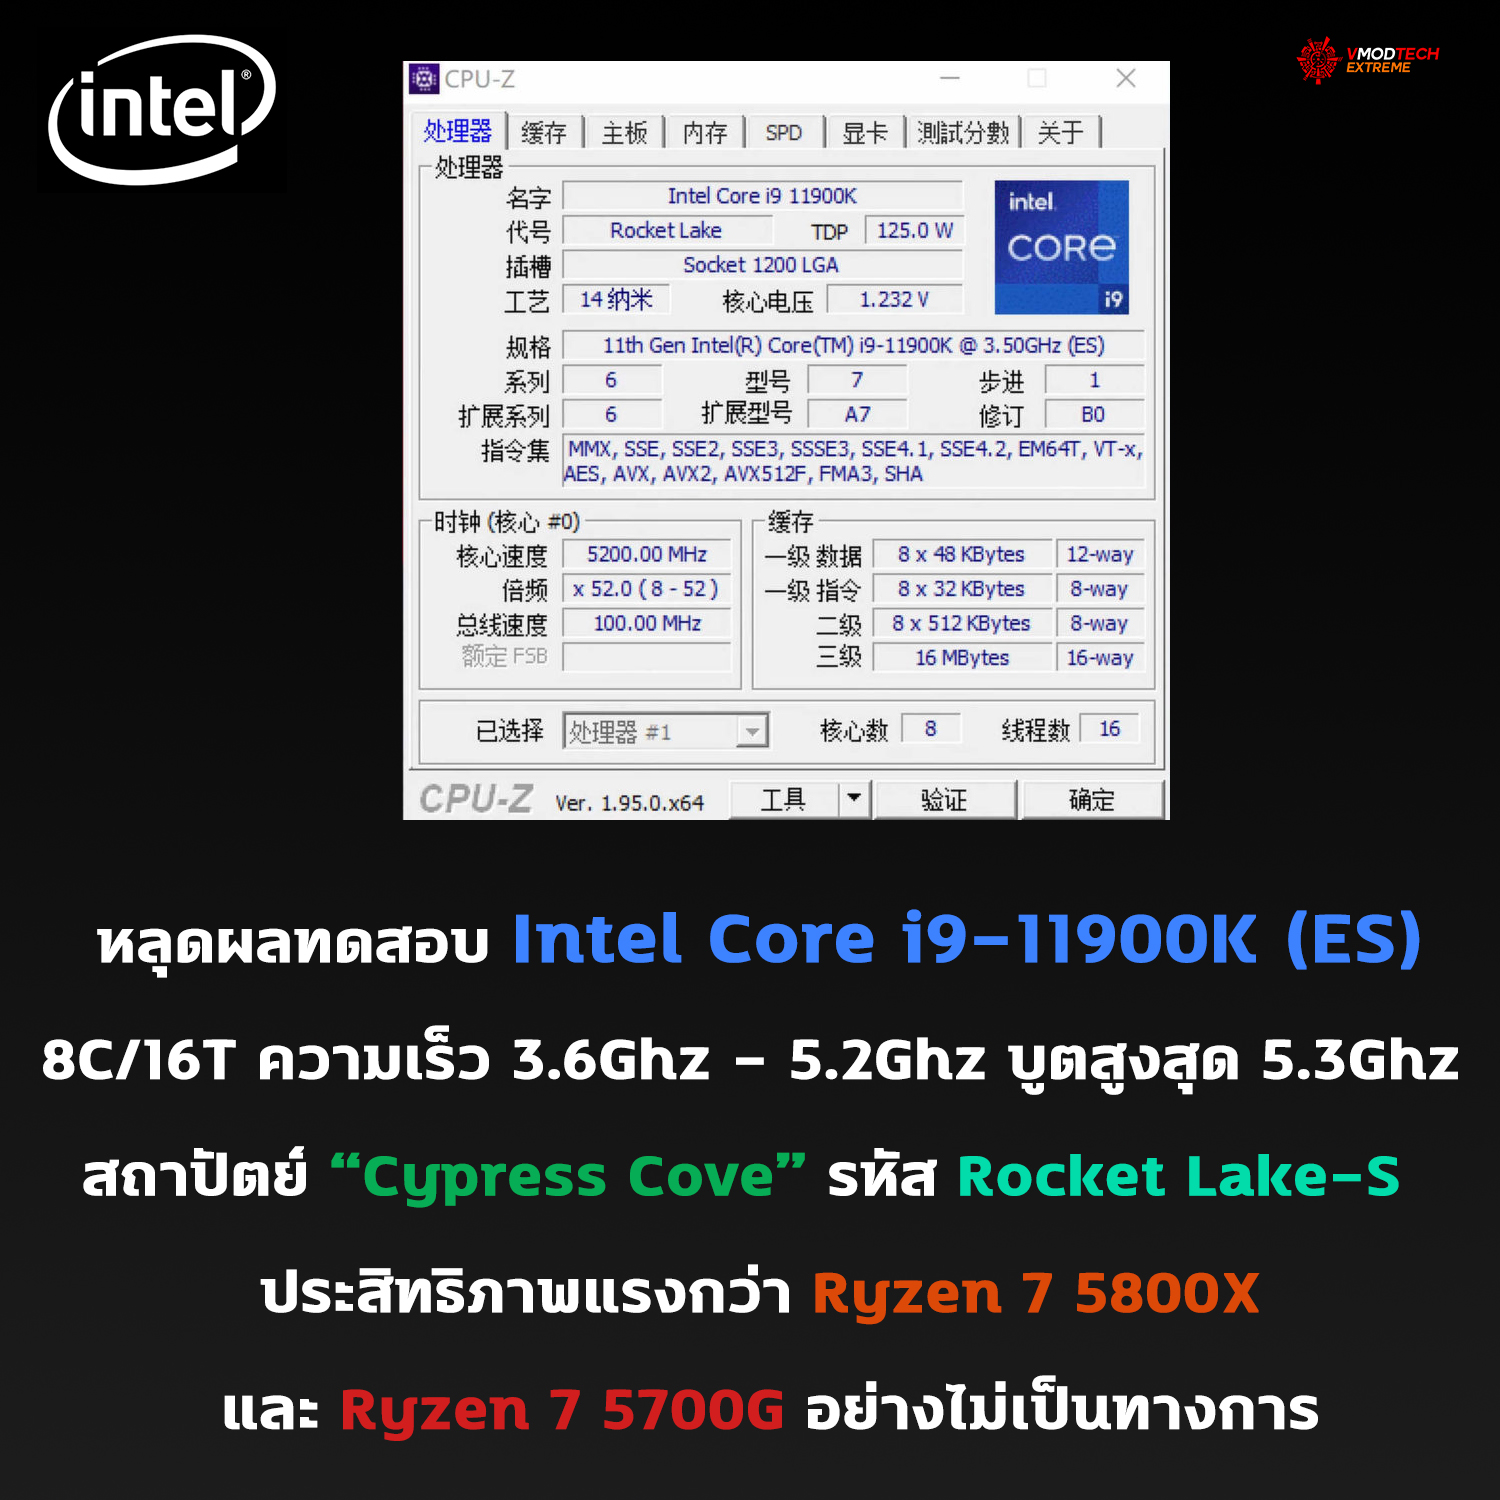 intel core i9 11900k rocket lake s z590 benchmark หลุดผลทดสอบ Intel Core i9 11900K ในรหัส Rocket Lake S รุ่นใหม่ล่าสุดทดสอบบนเมนบอร์ด Z590 ประสิทธิภาพแรงกว่า Ryzen 7 5800X และ Ryzen 7 5700G อย่างไม่เป็นทางการ